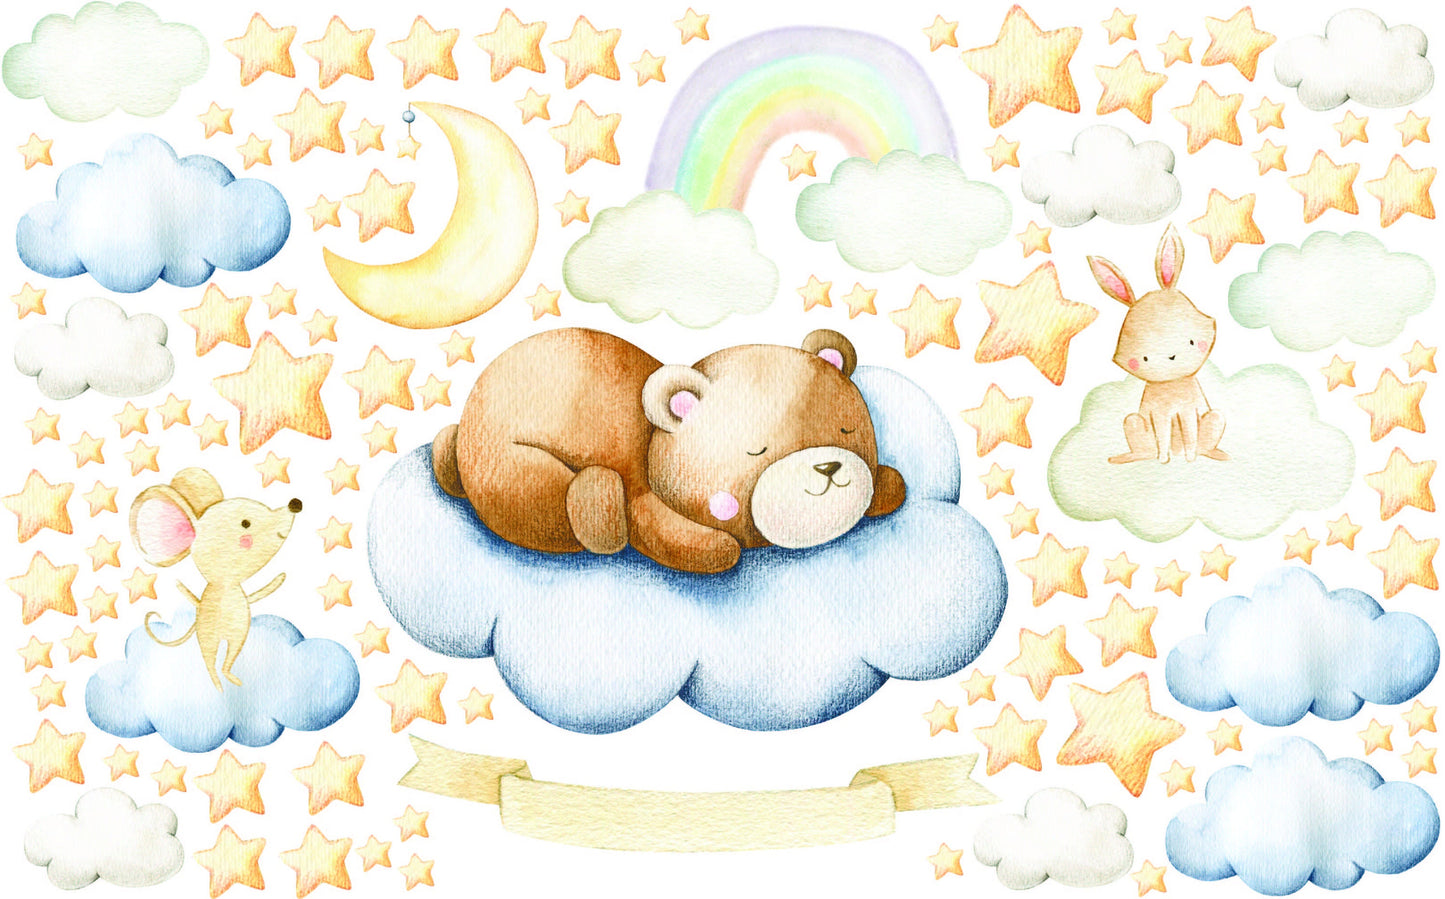 Bear wall sticker Sleeping Animal Decal Stars Moon Clouds Woodland night sky Custom Name, LF037